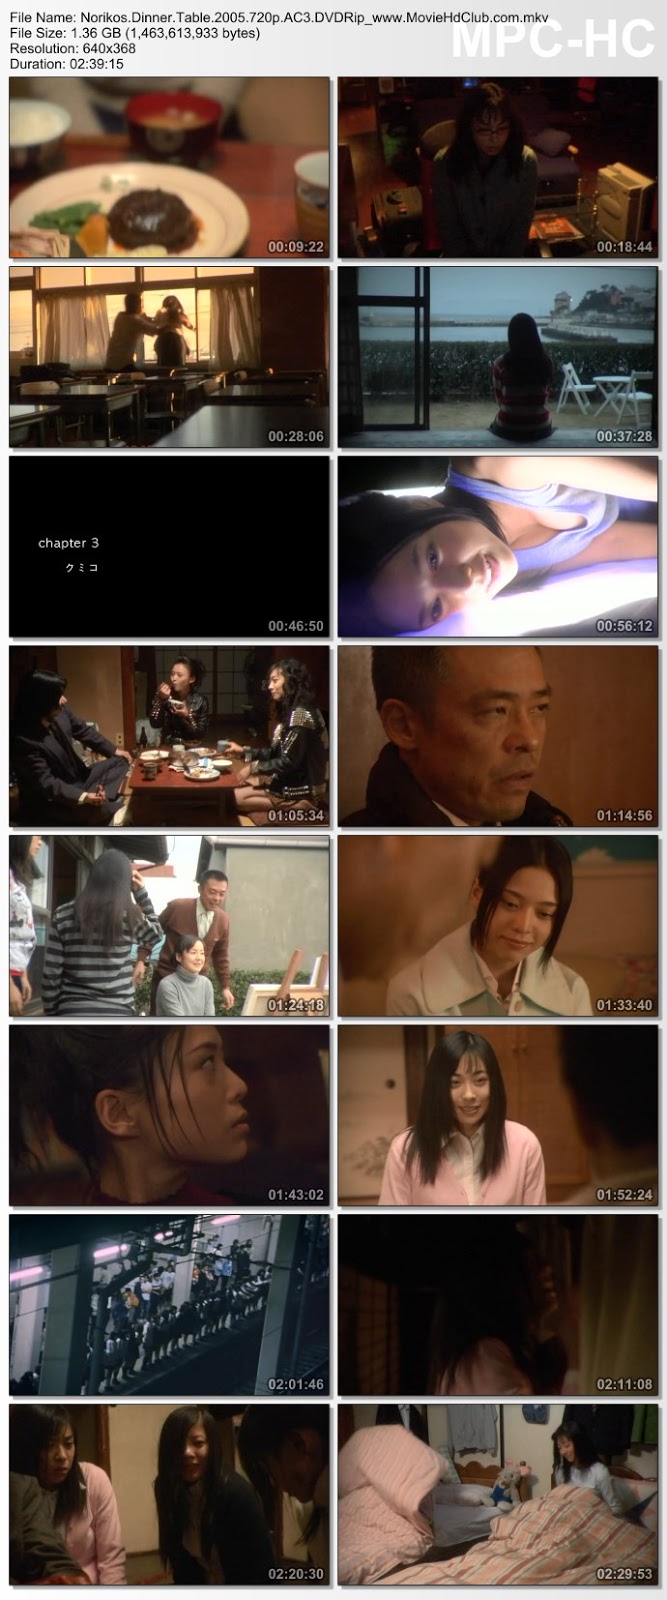 [Mini-HD] Noriko's Dinner Table (2005) - โต๊ะอาหารของโนริโกะ [DVD-Rip][Soundtrack บรรยายไทย][.MKV][1.36GB] ND_MovieHdClub_SS